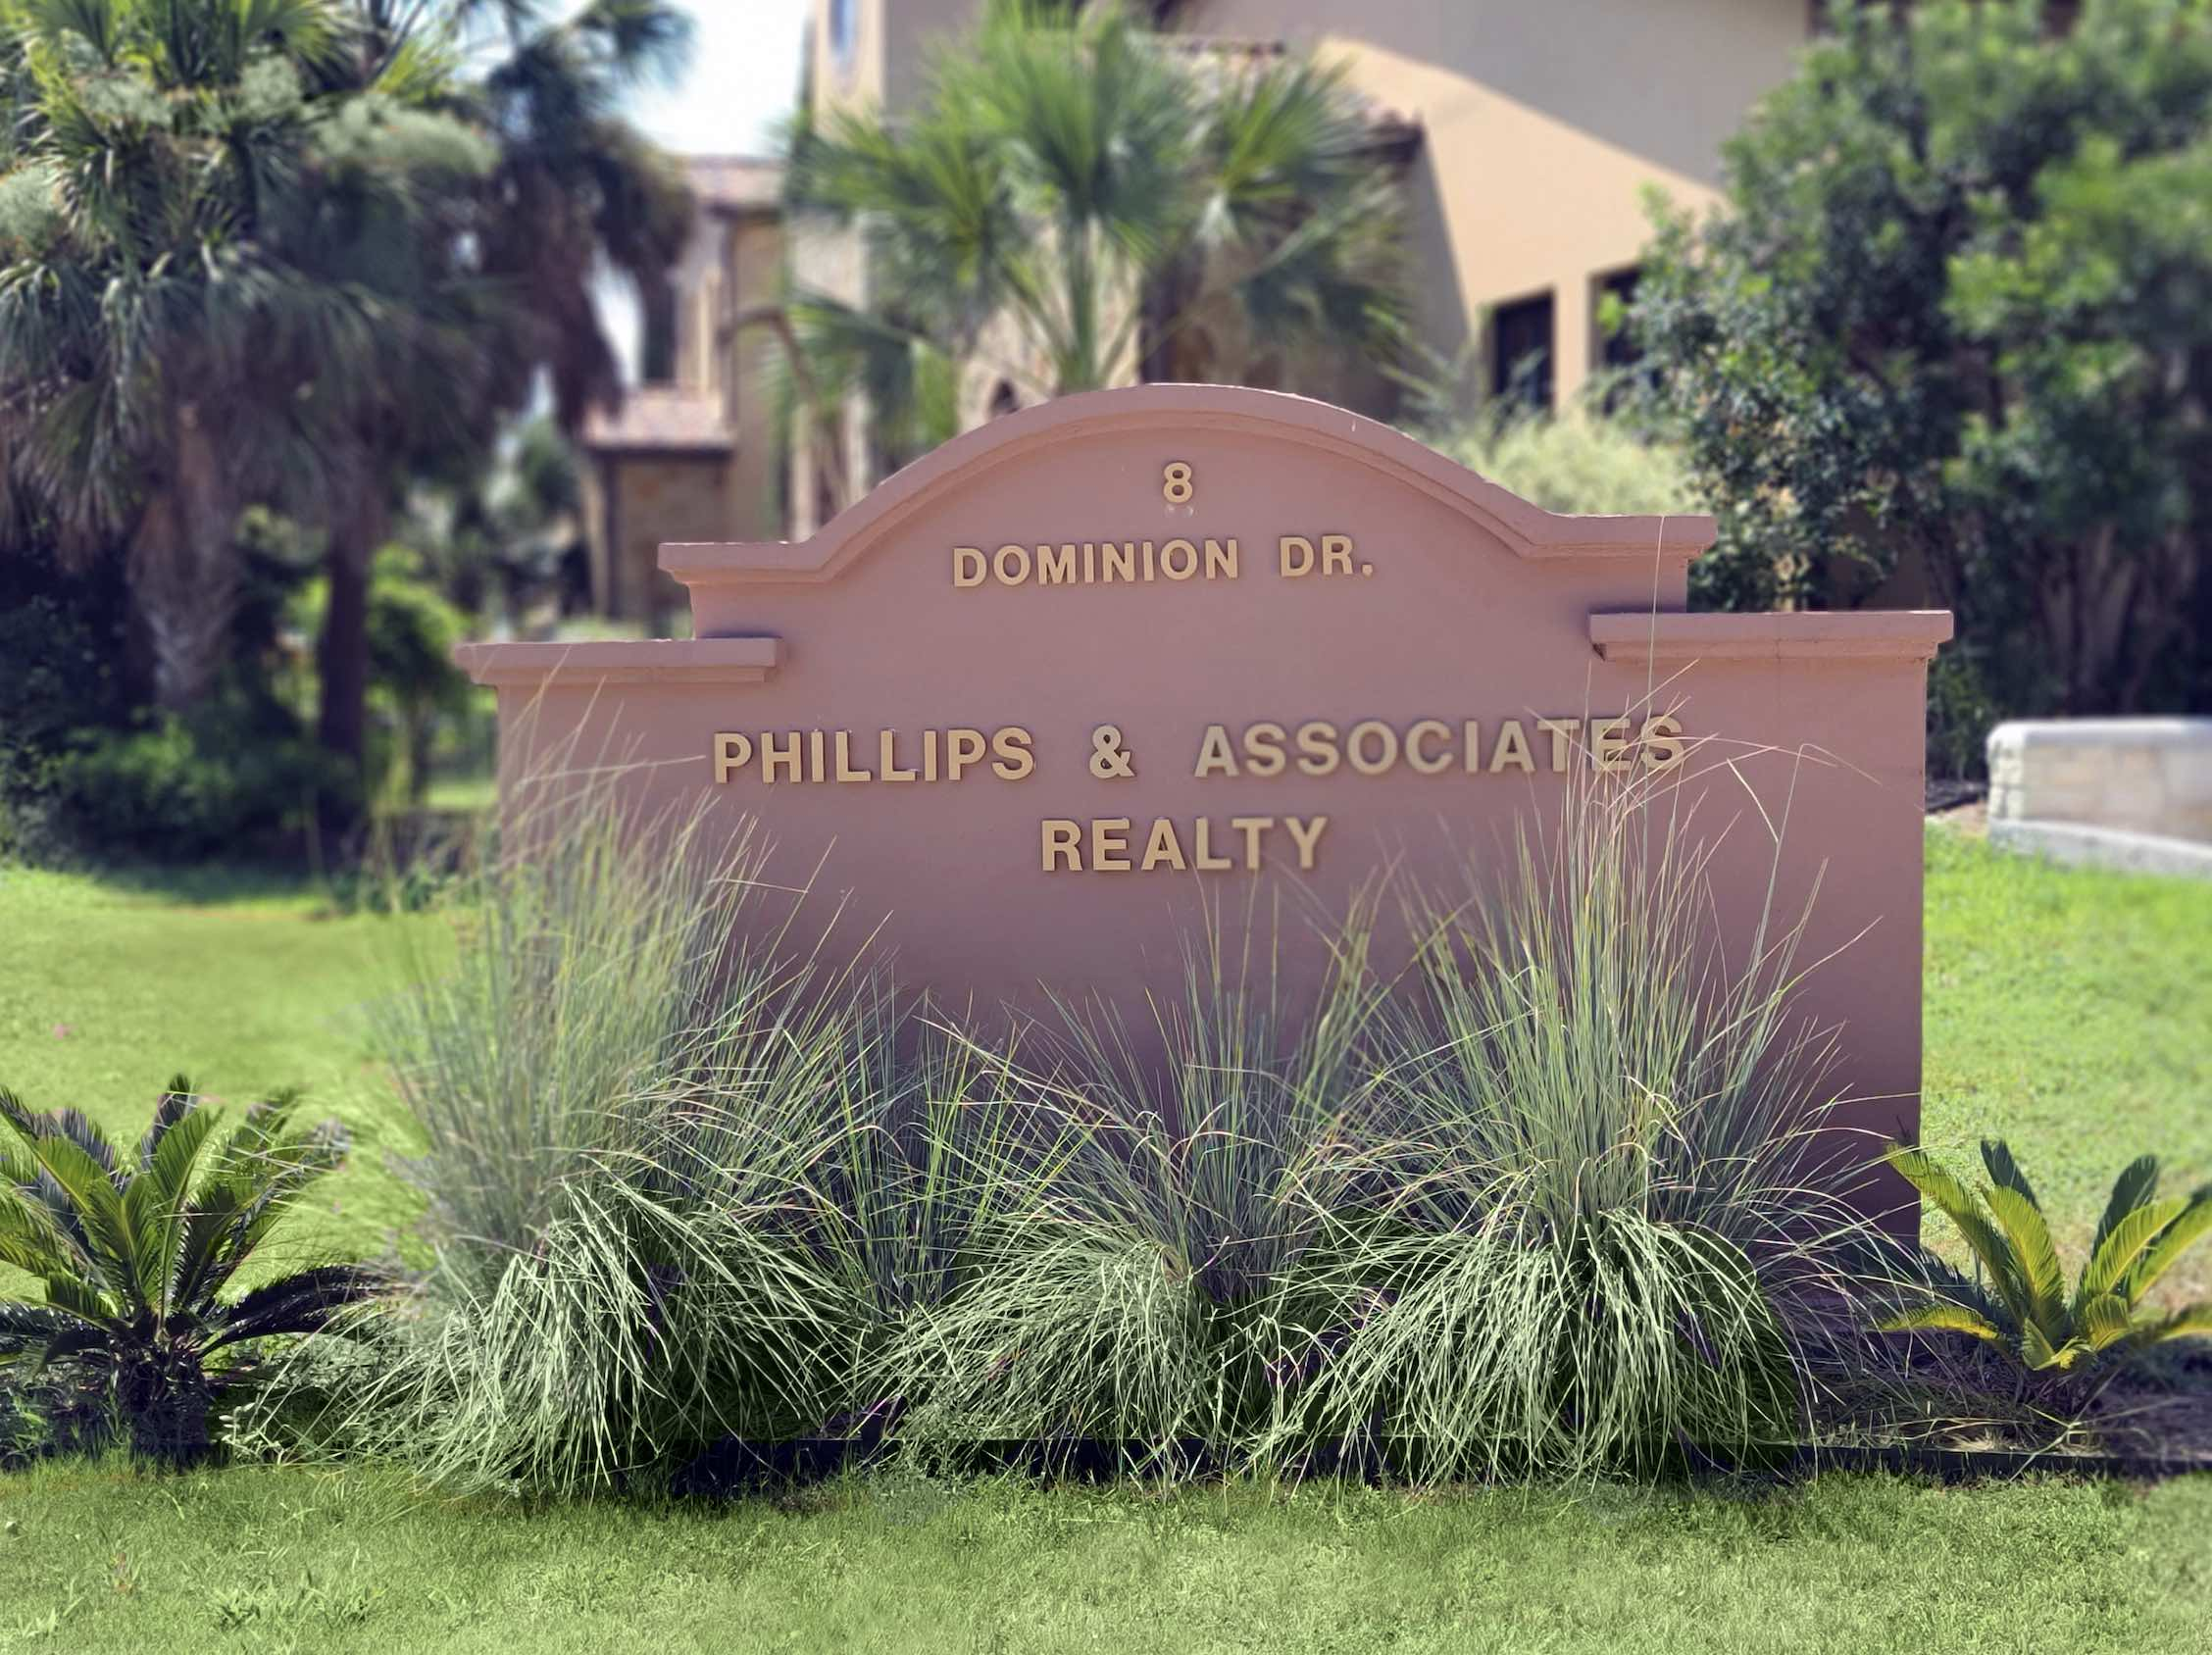 Phillips & Associates Realty'